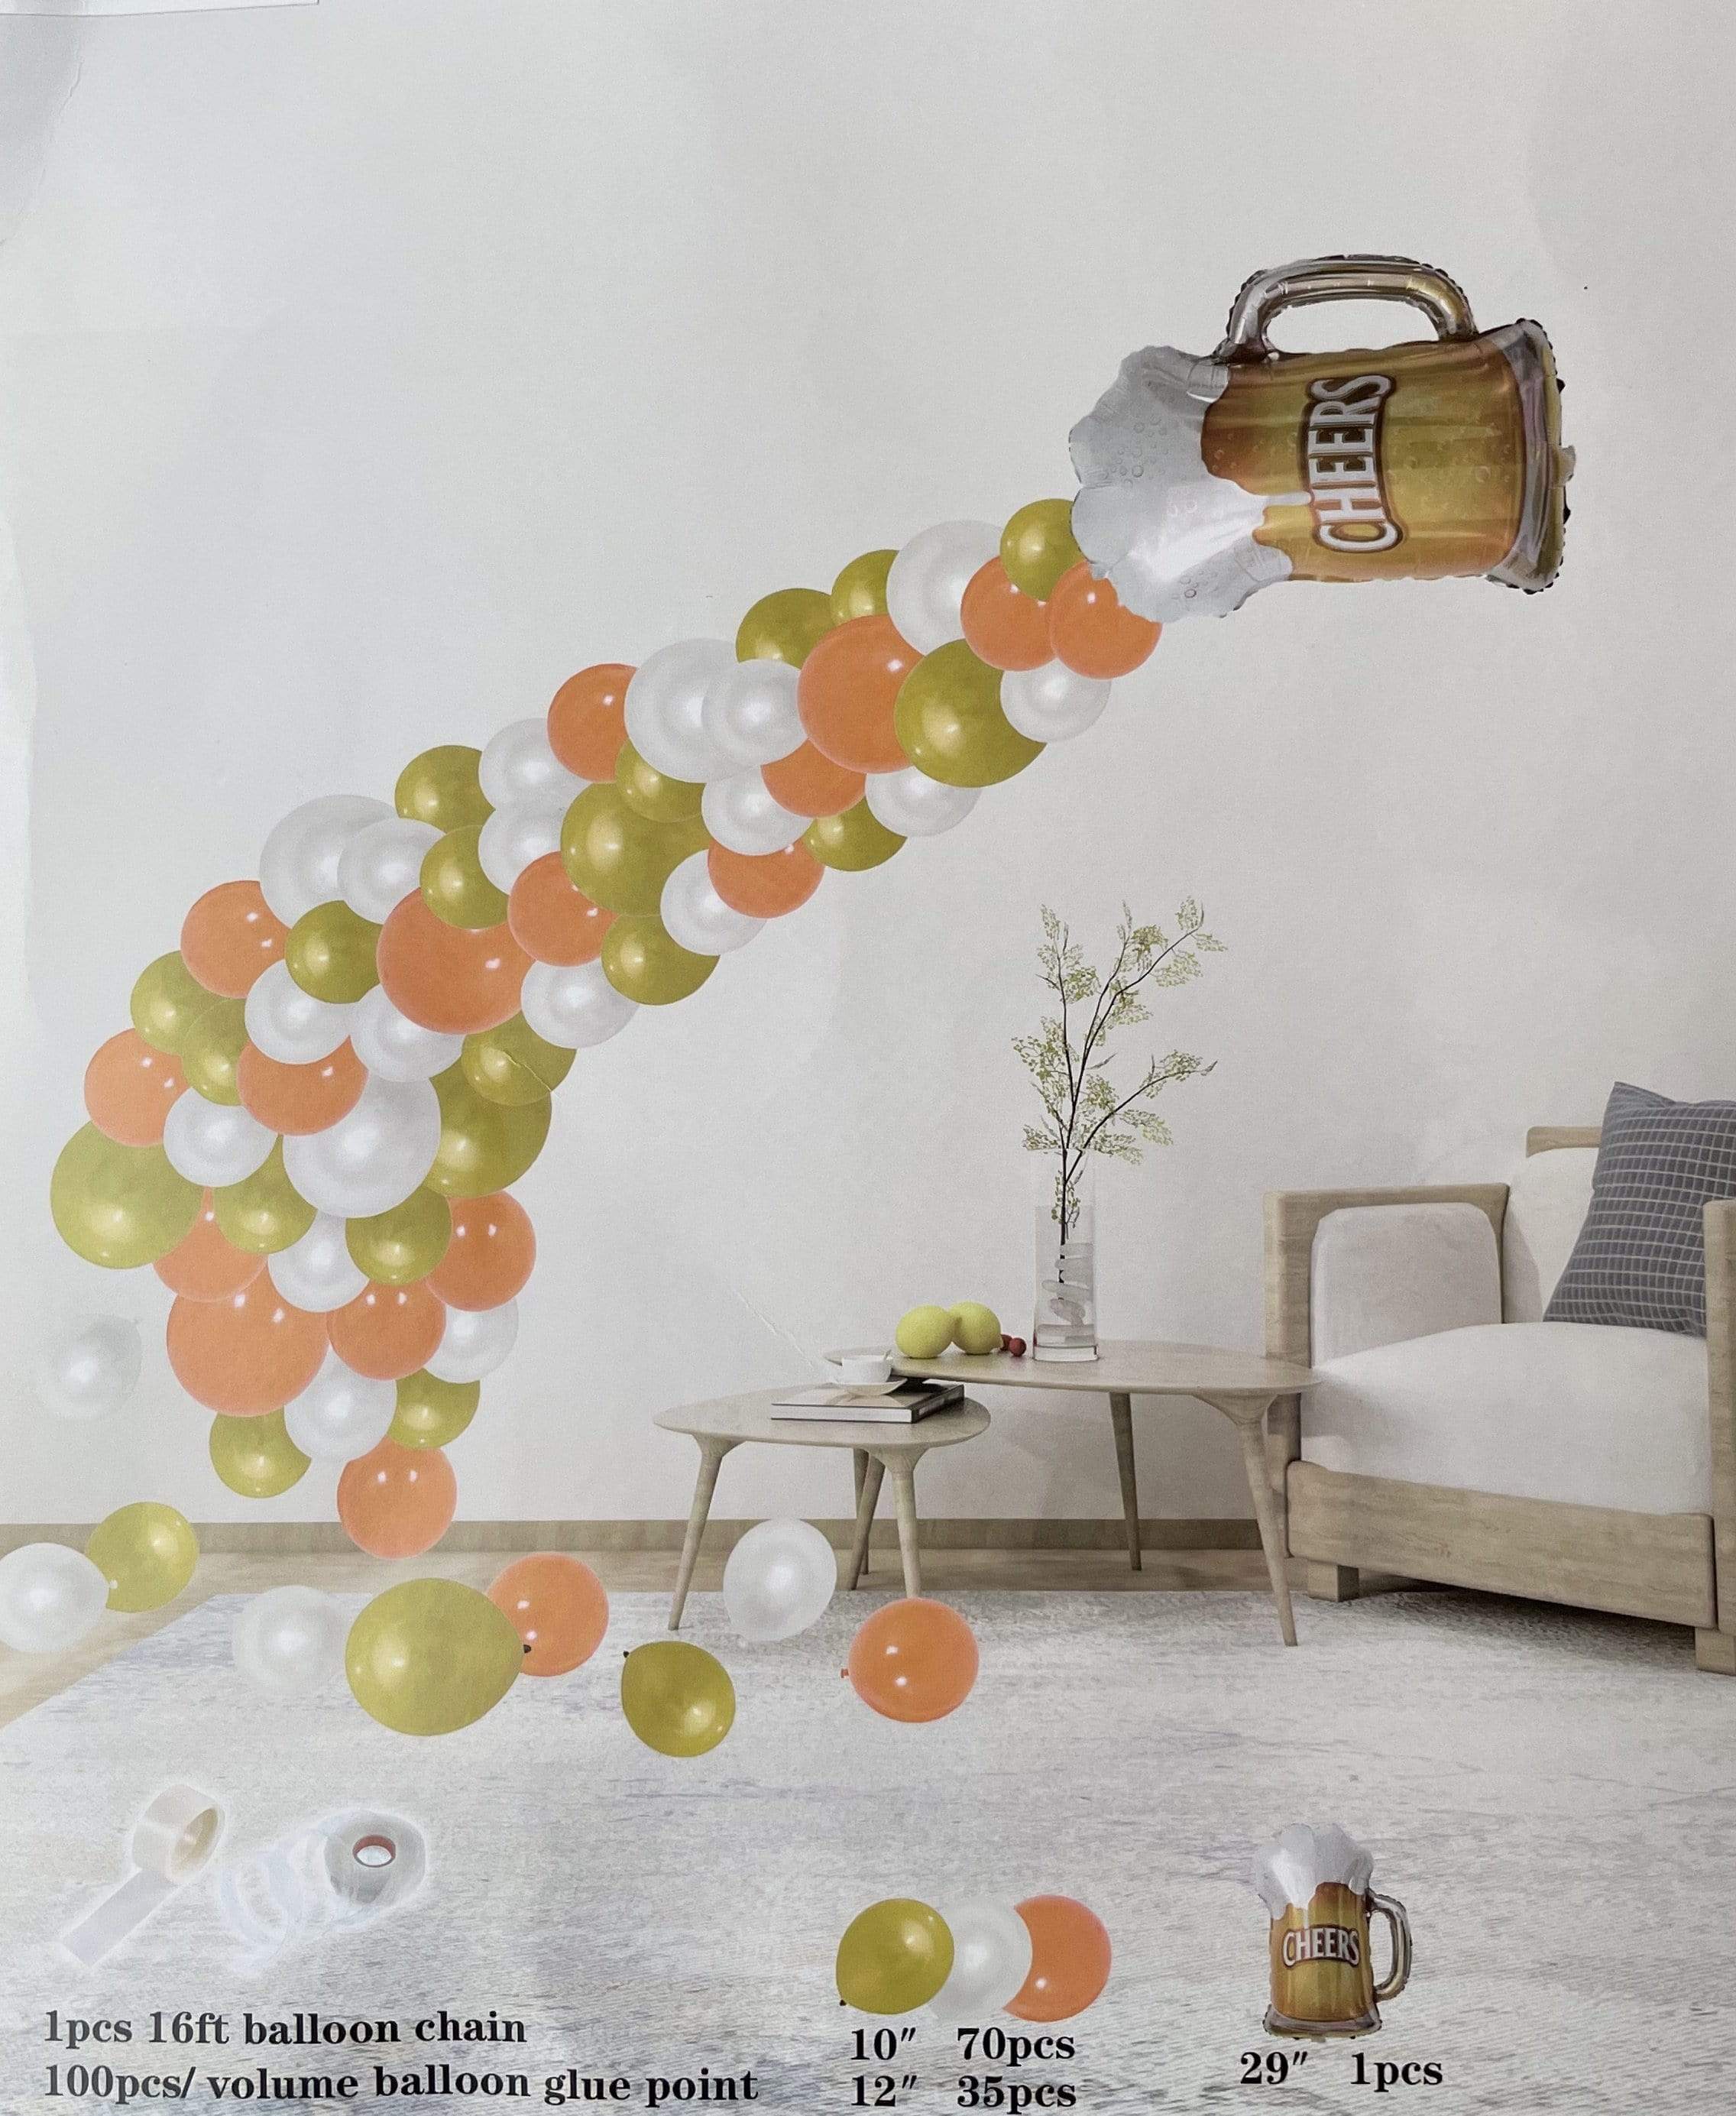 Wholesale 100 pcs. Pastel Rainbow Party Decor | Rainbow balloons